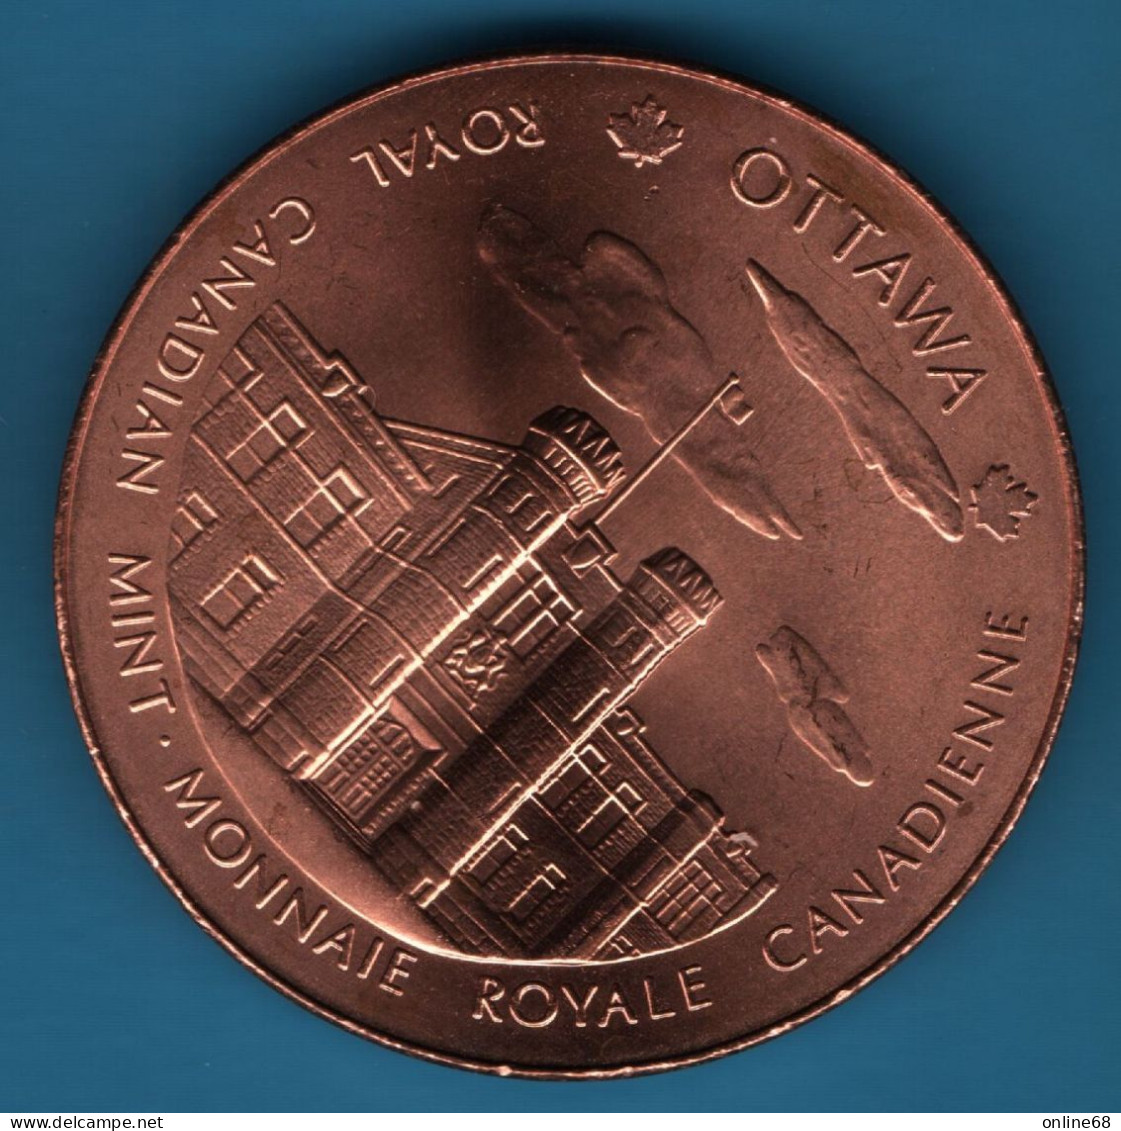 CANADA Royal Canadian Mint Medal  Ottawa & Winnipeg Mints - Gewerbliche